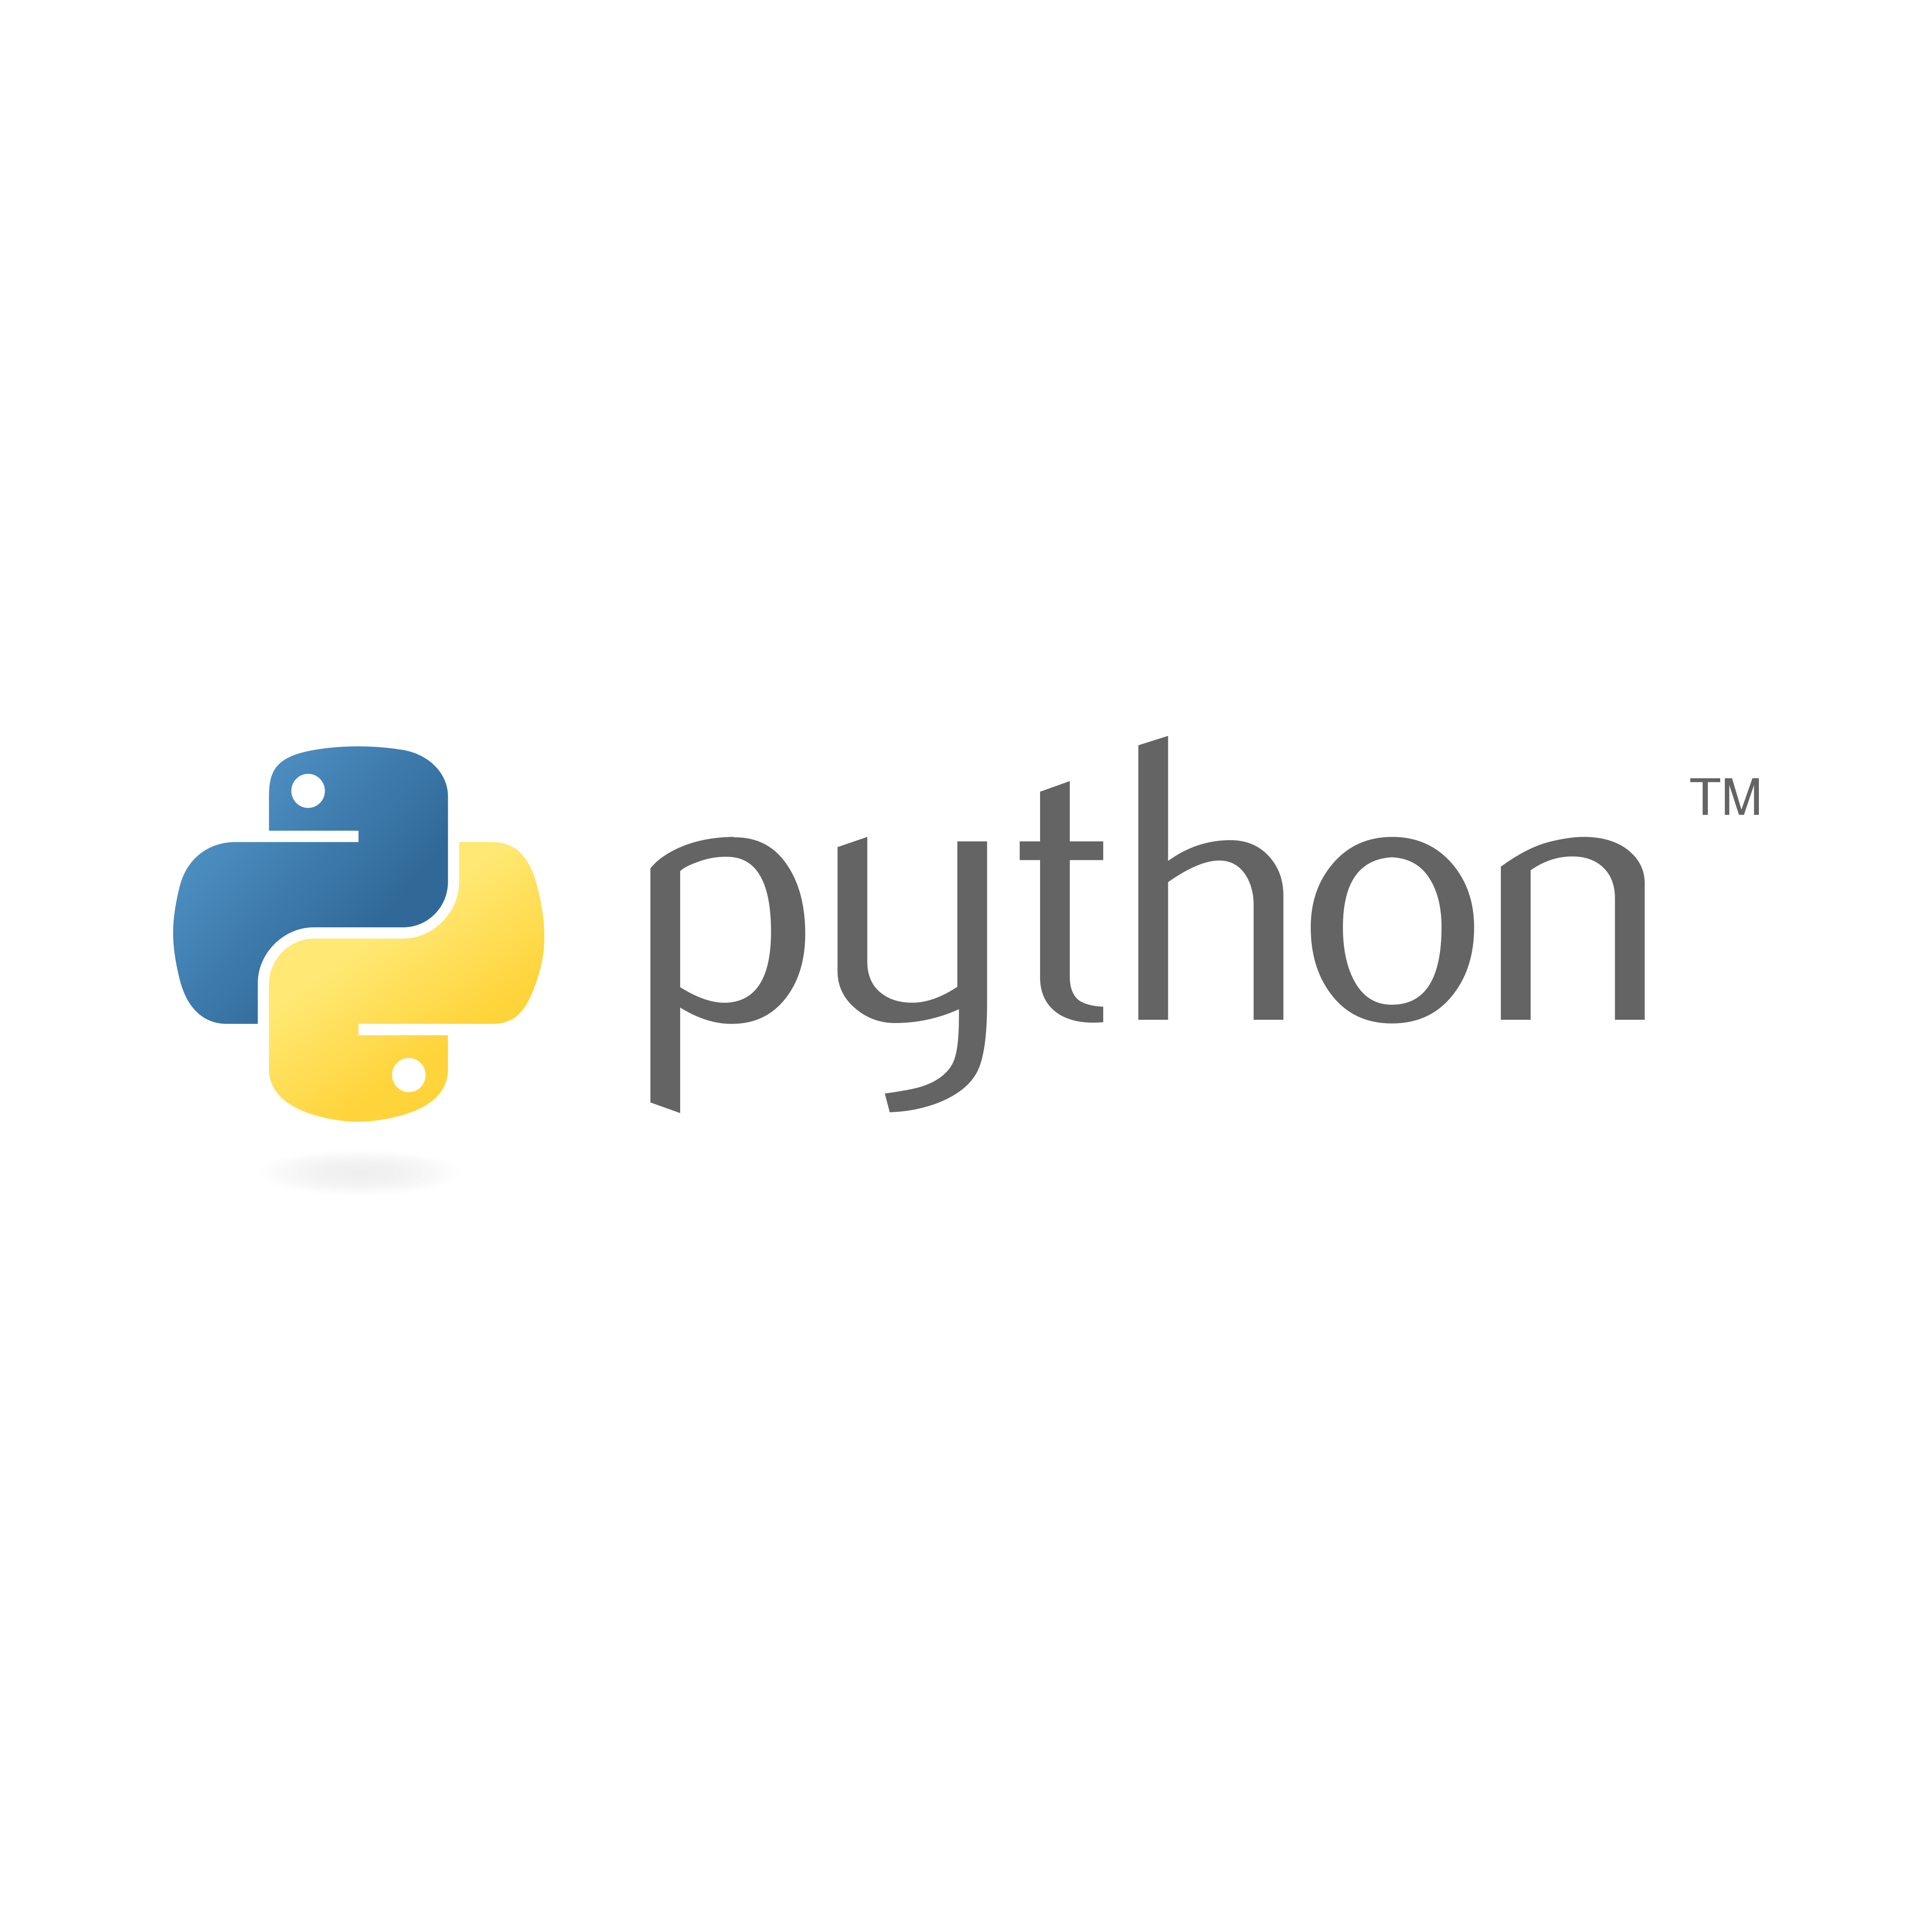 python logo 0 - Python Logo